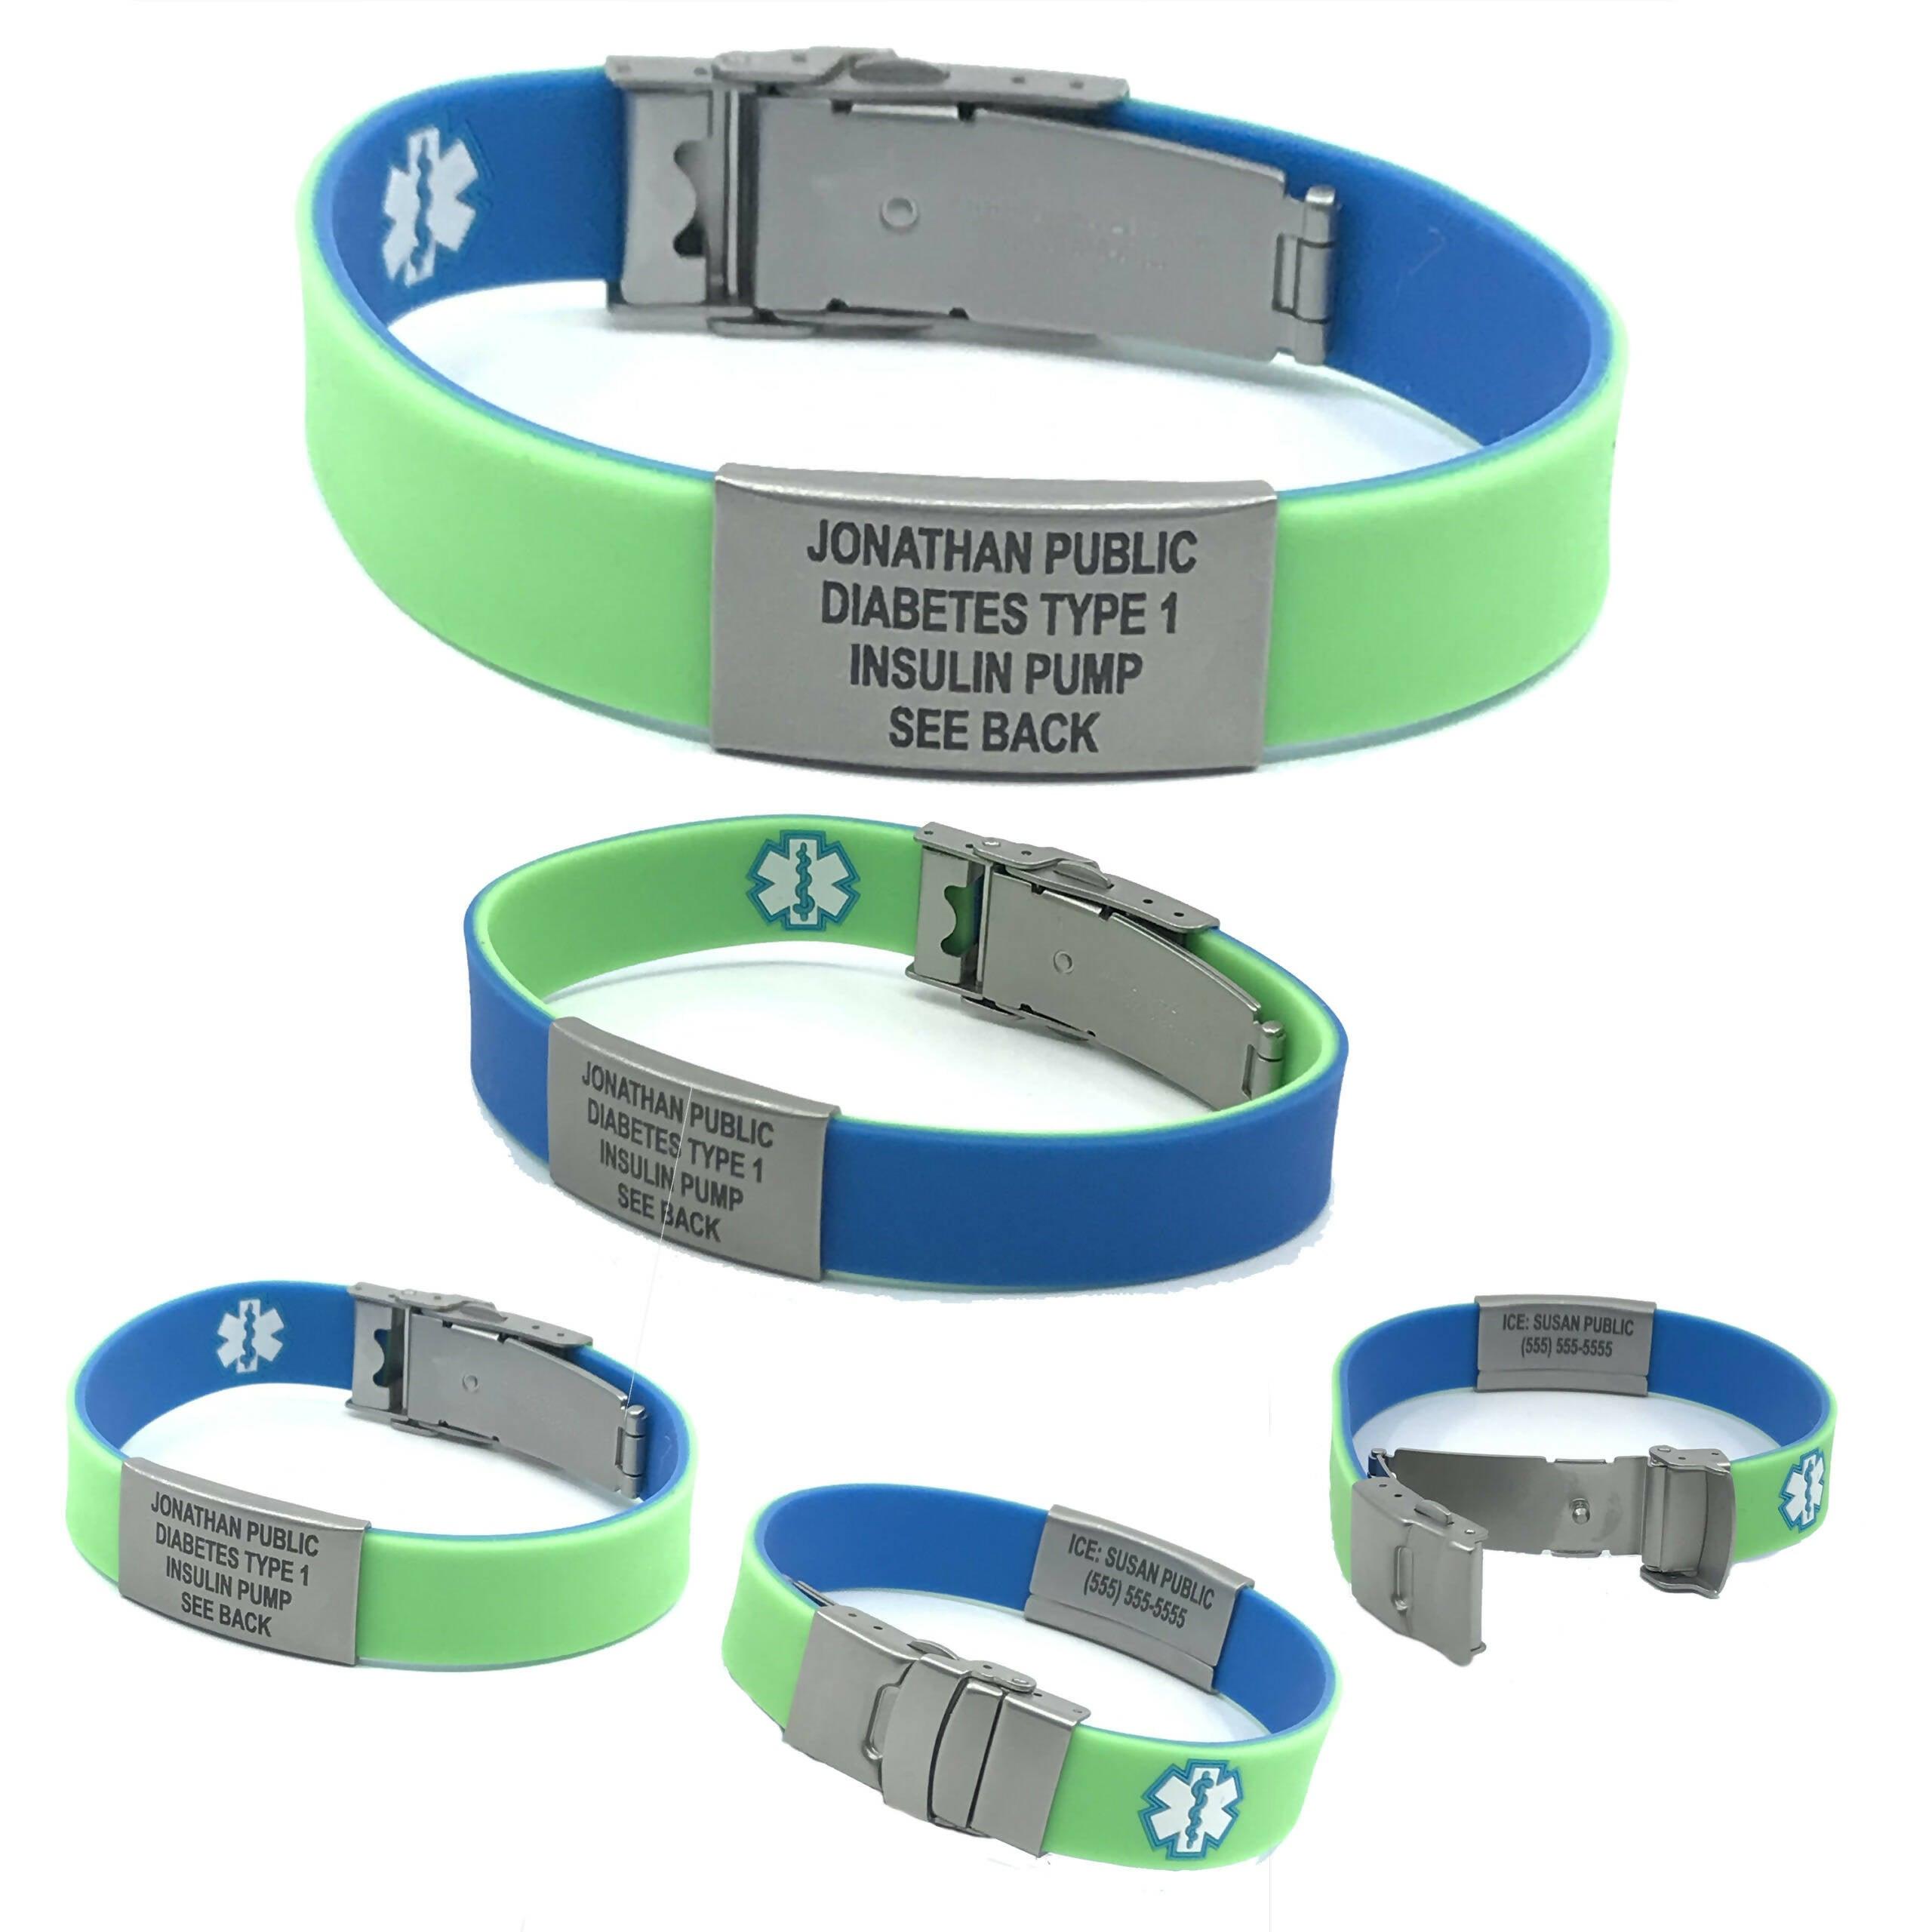 Buy linnalove-Pre-Engraved Simple Rolo Chain Medical Alert id Bracelet for  Women-Diabetes Type 1 at Amazon.in